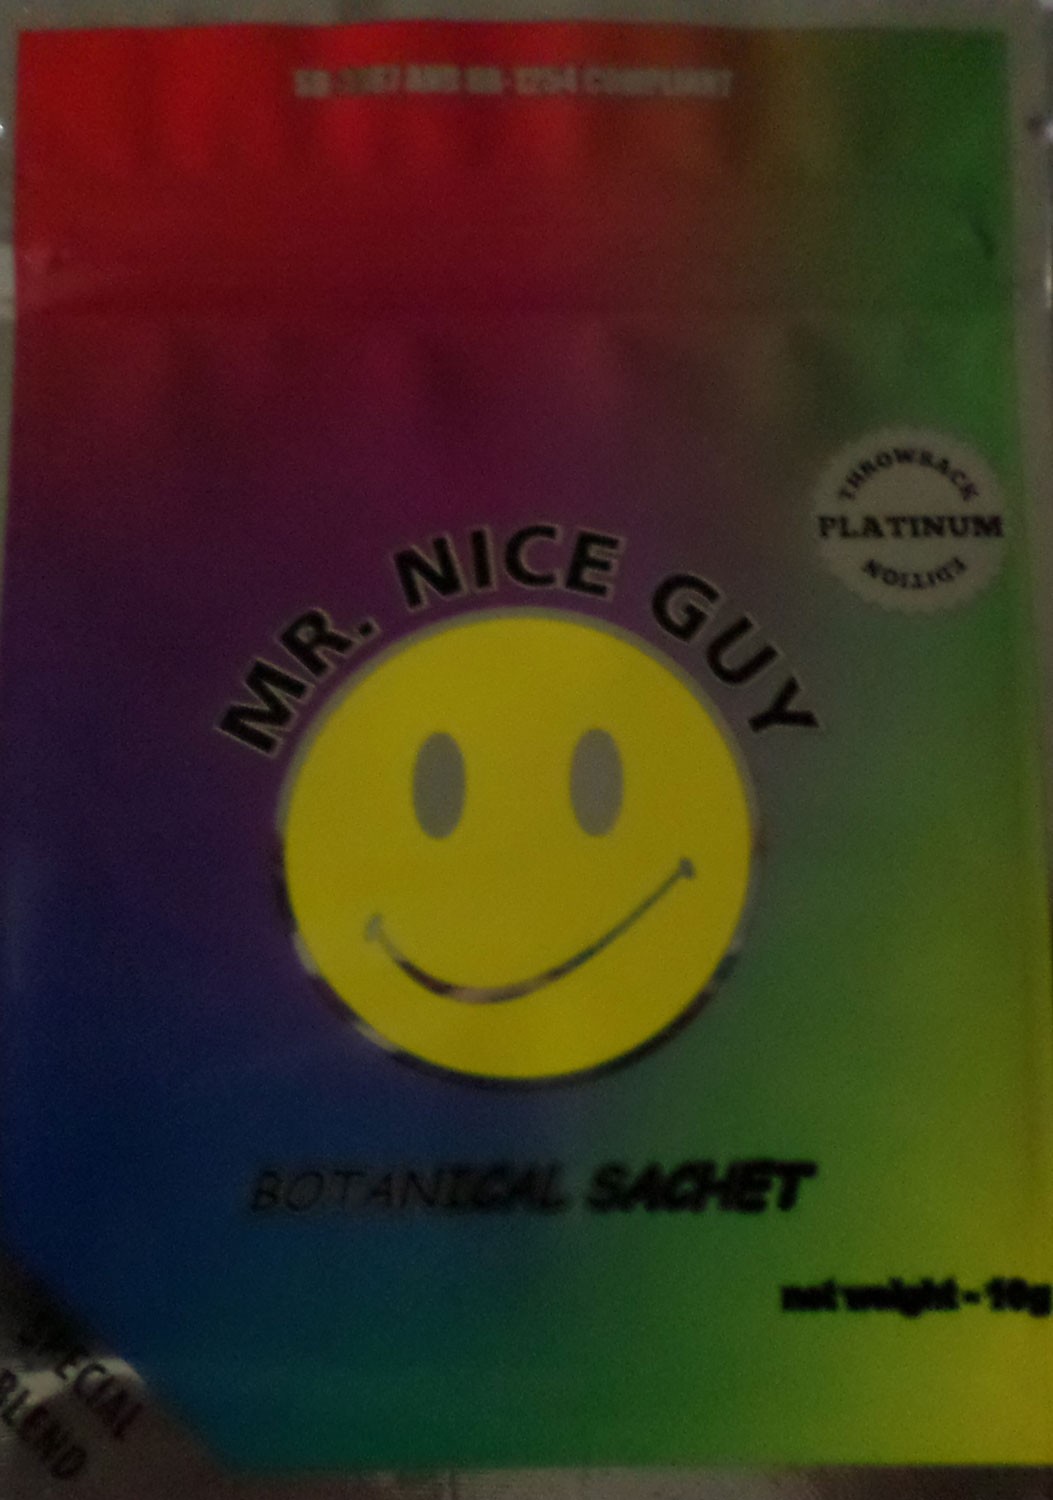 Mr Nice guy 10g incense 3x pack